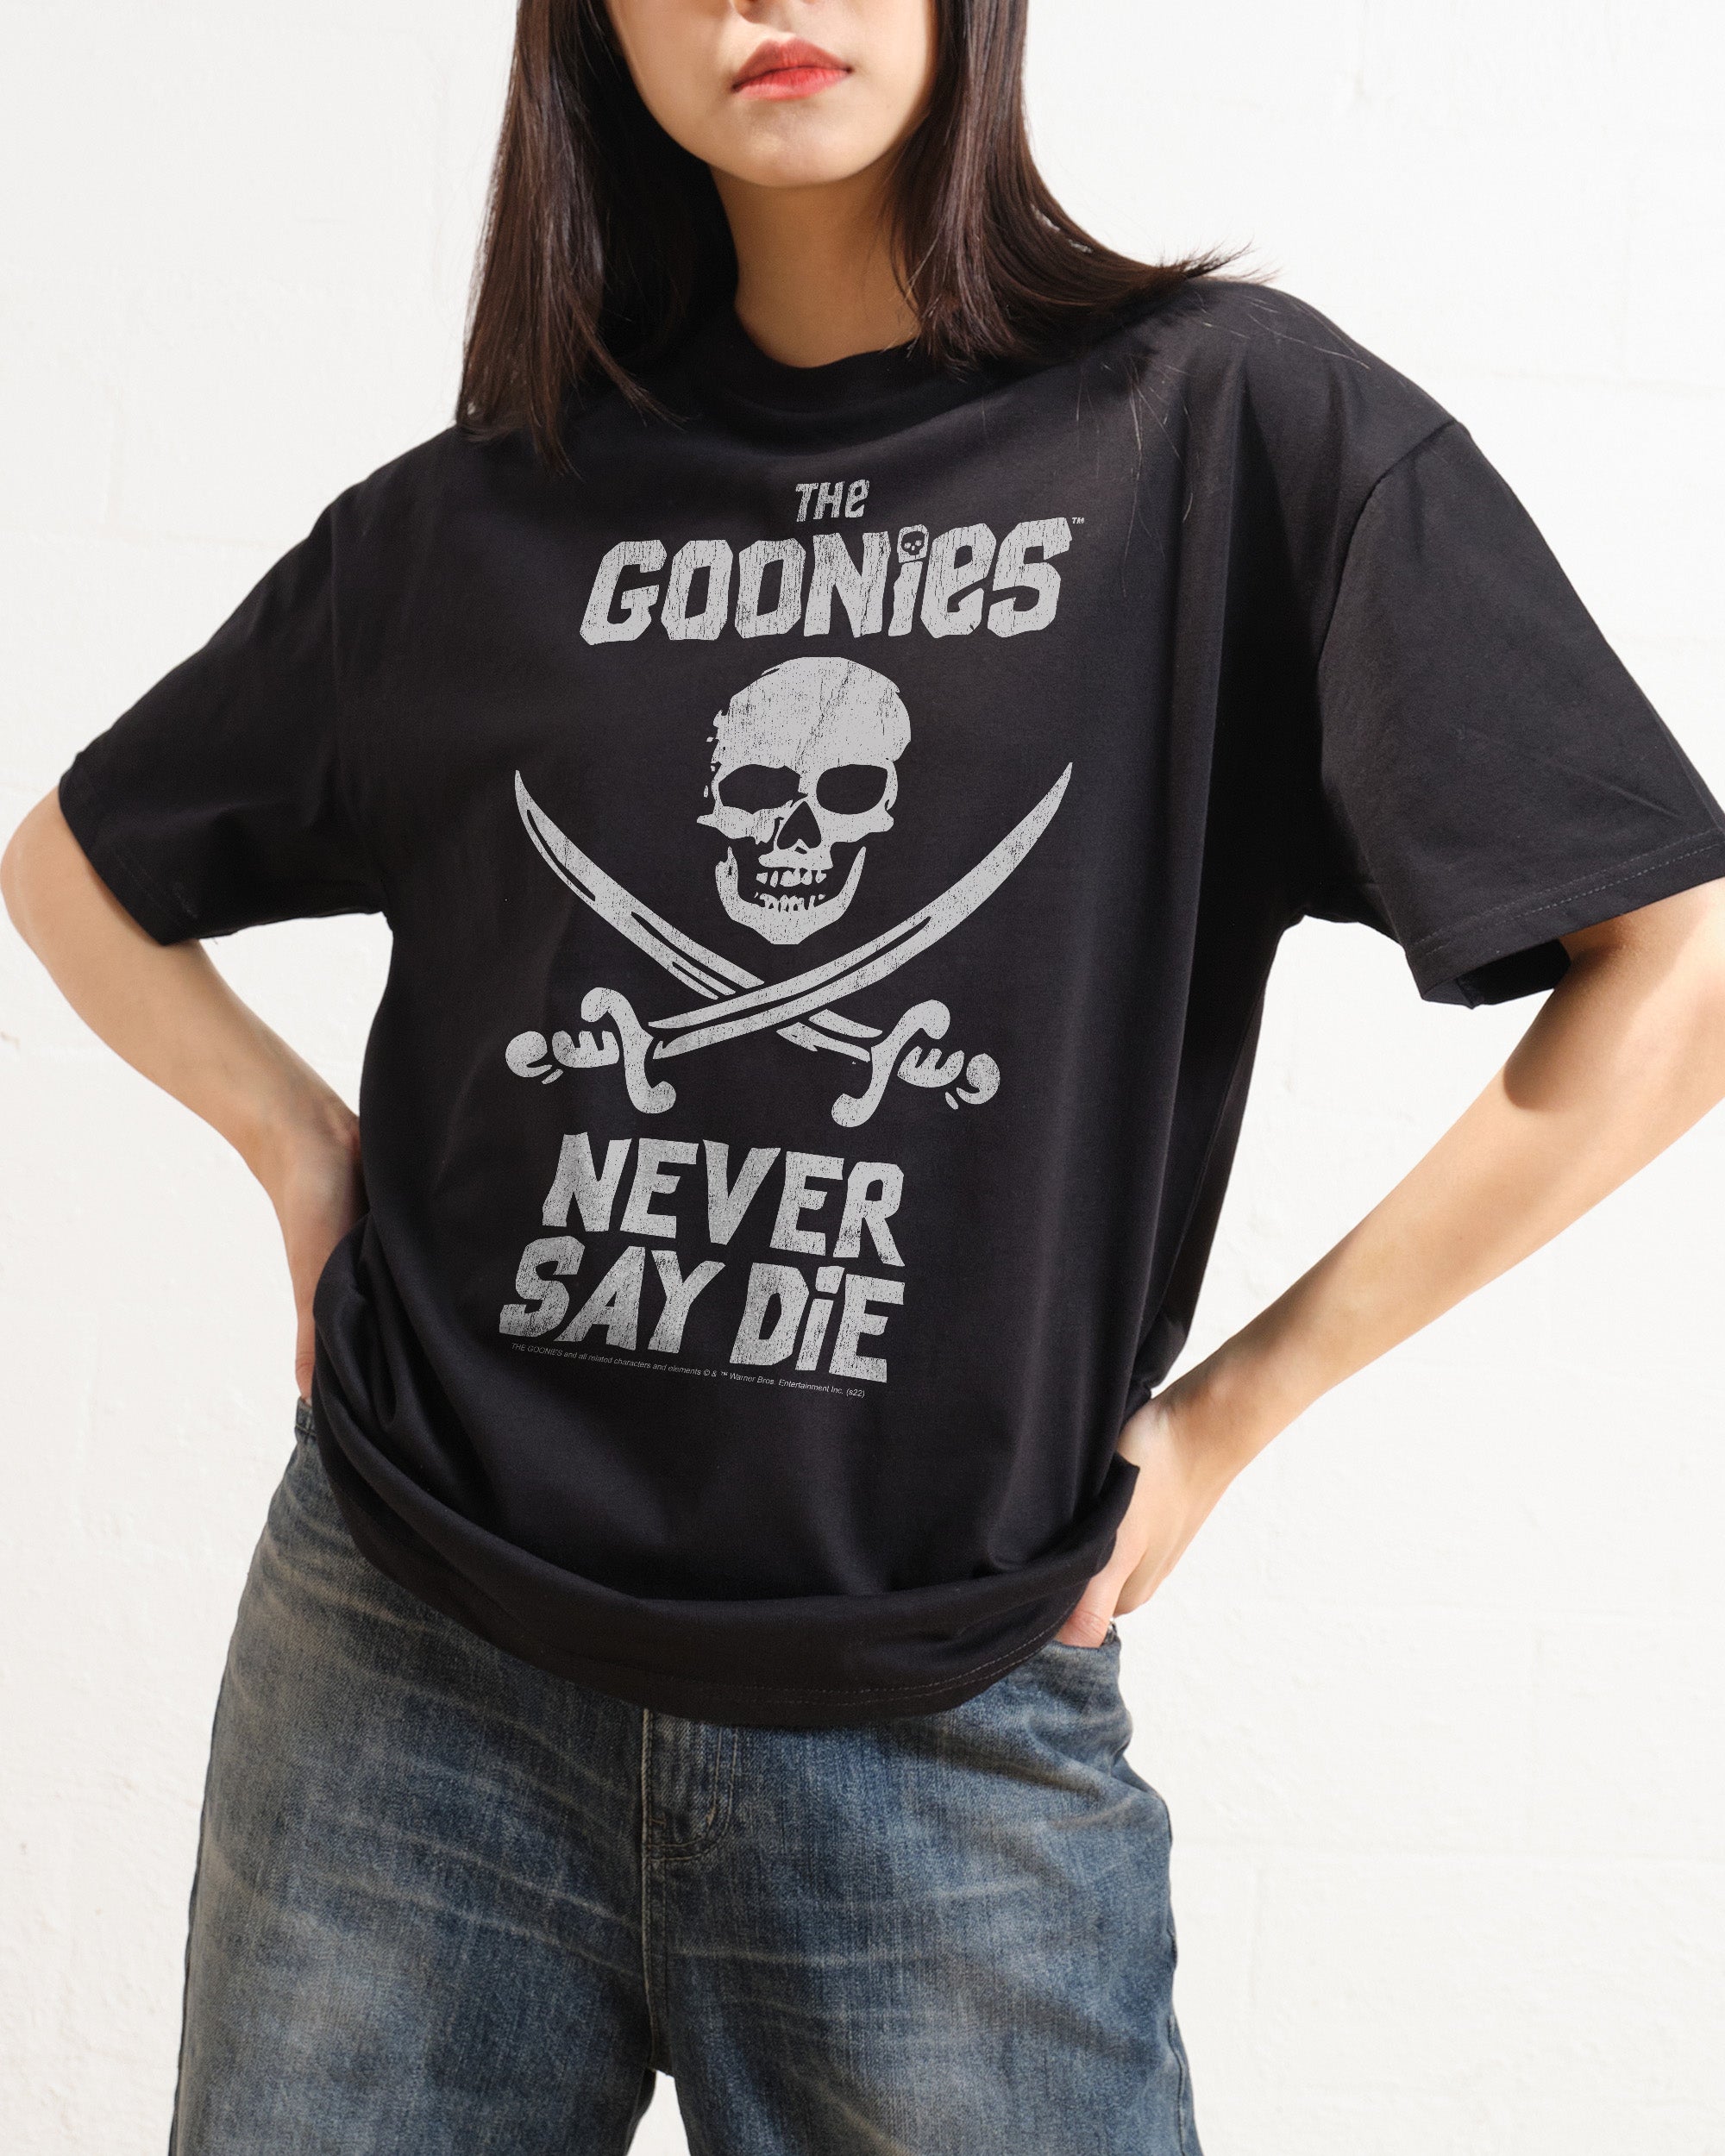 Goonies Astoria Oregon T-Shirt